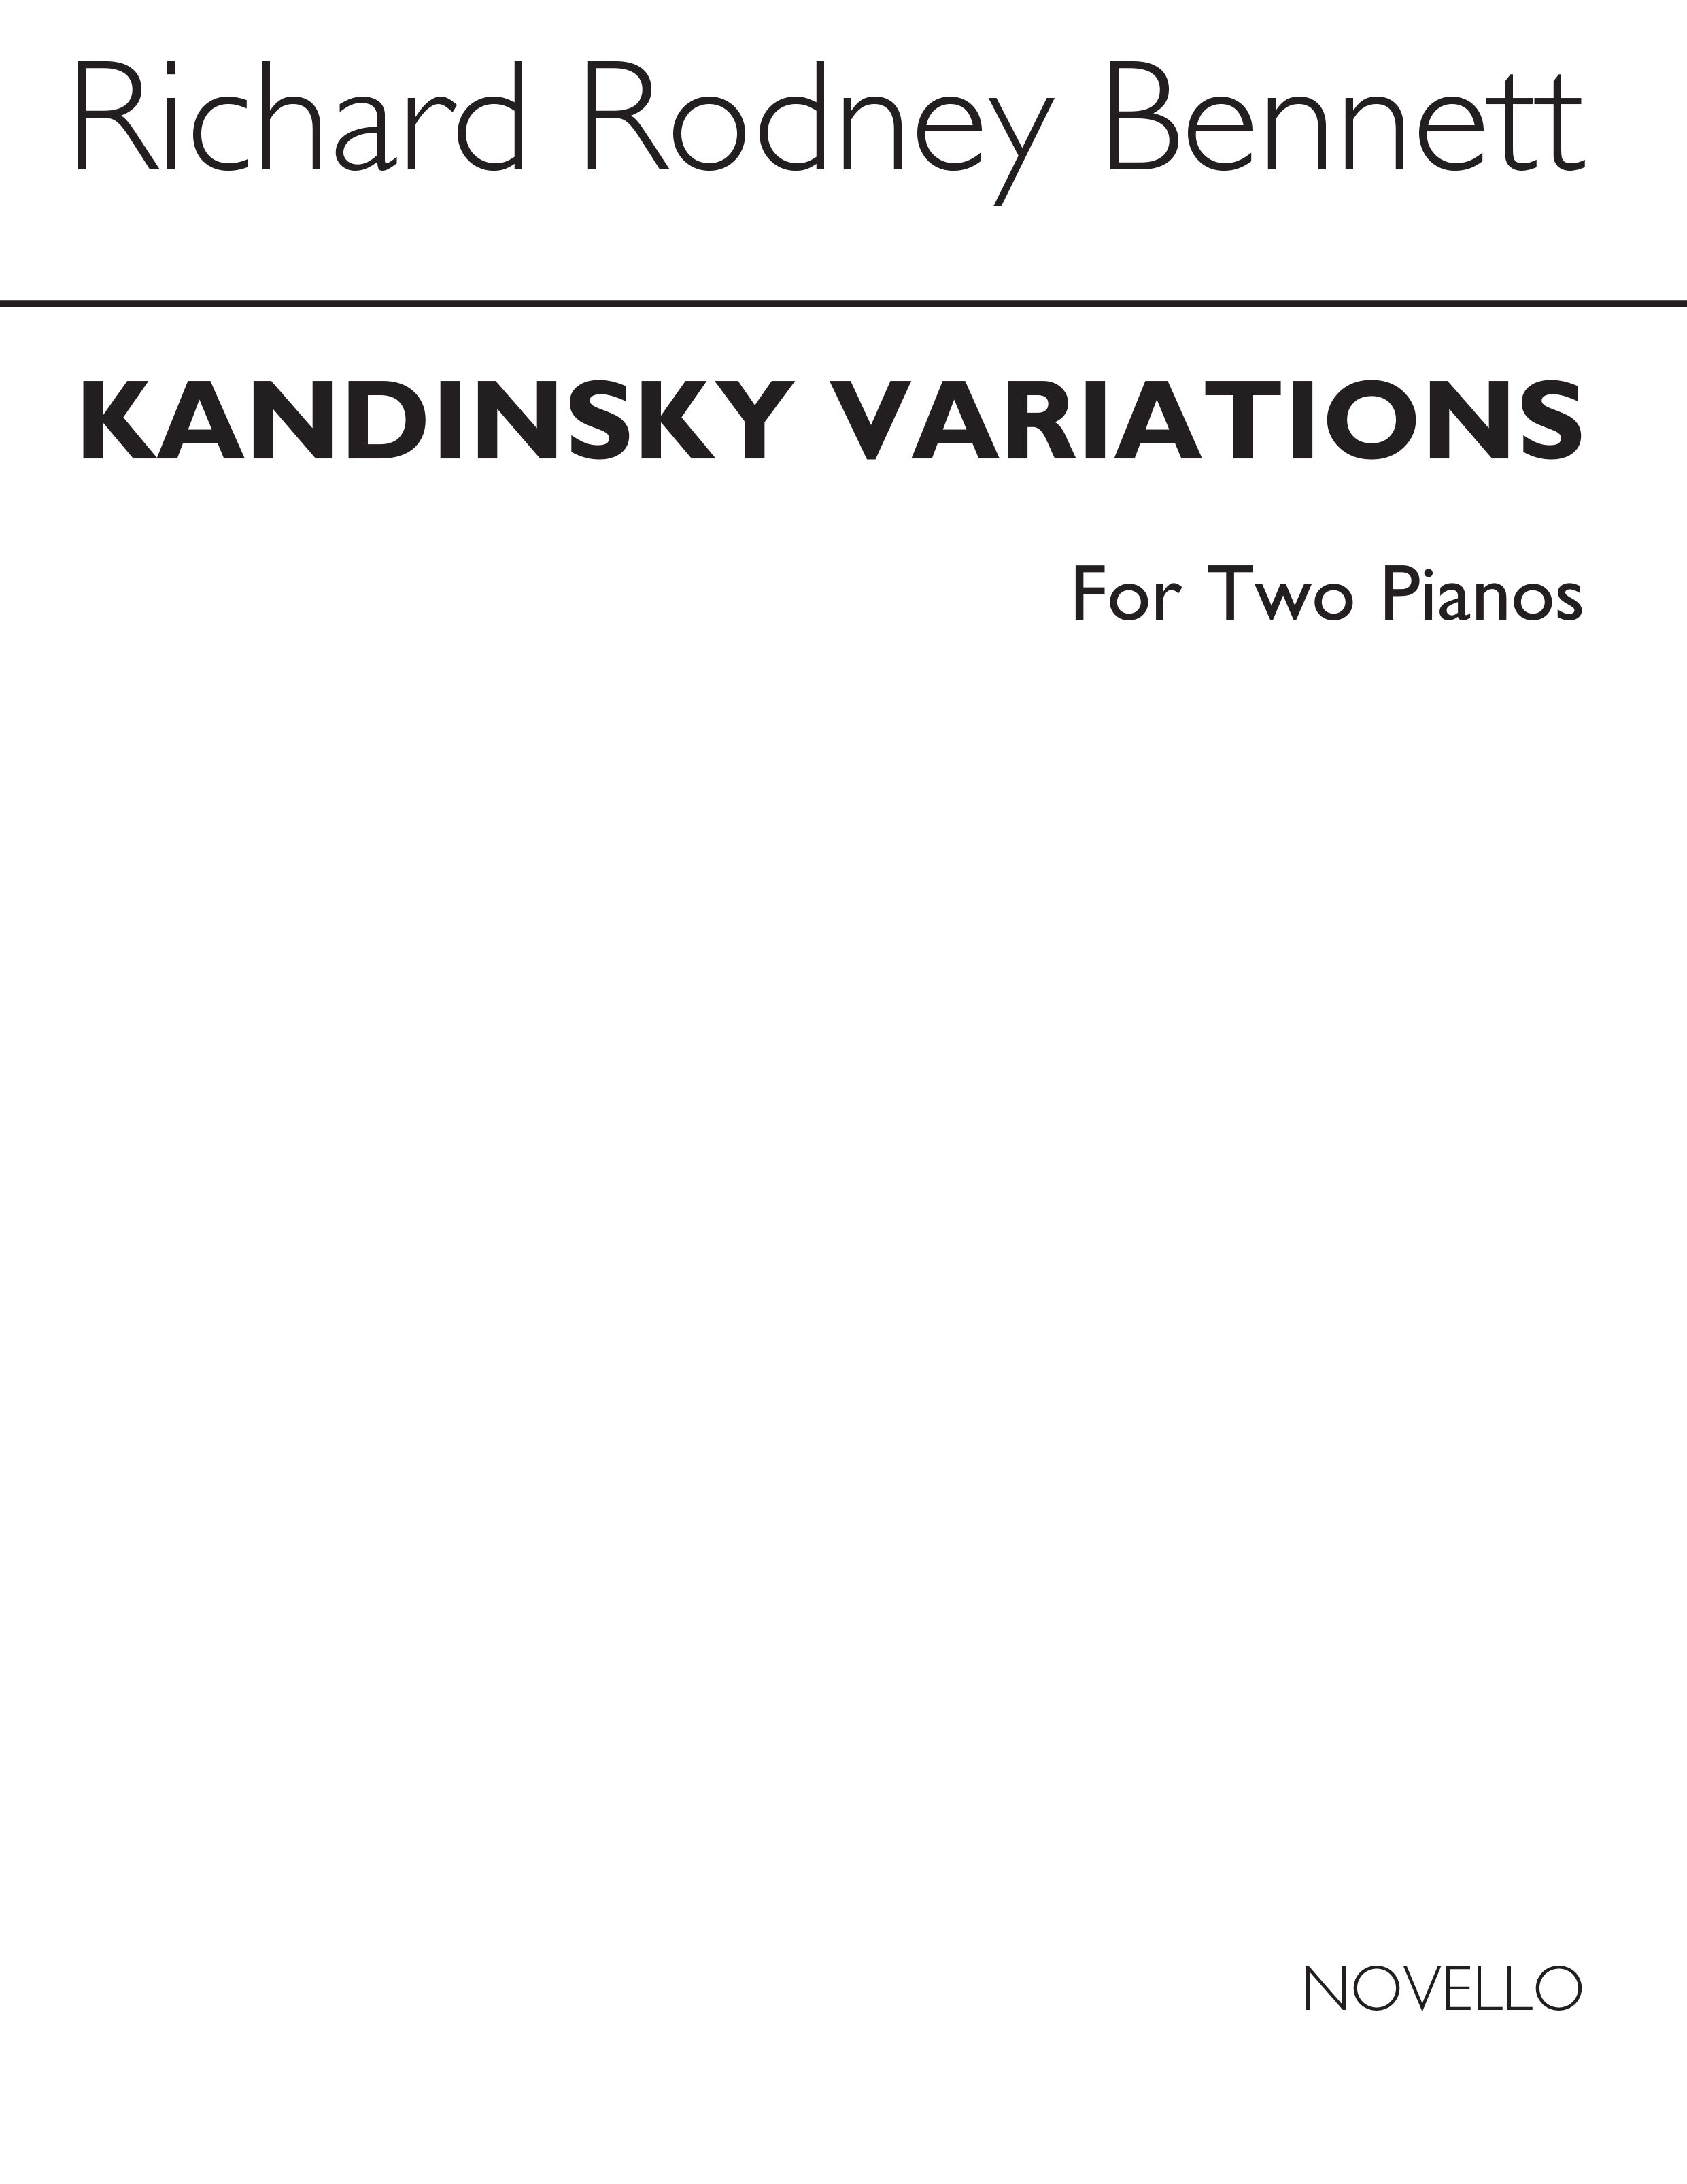 Richard Rodney Bennett: Kandinsky Variations For Two Pianos: Piano Duet: